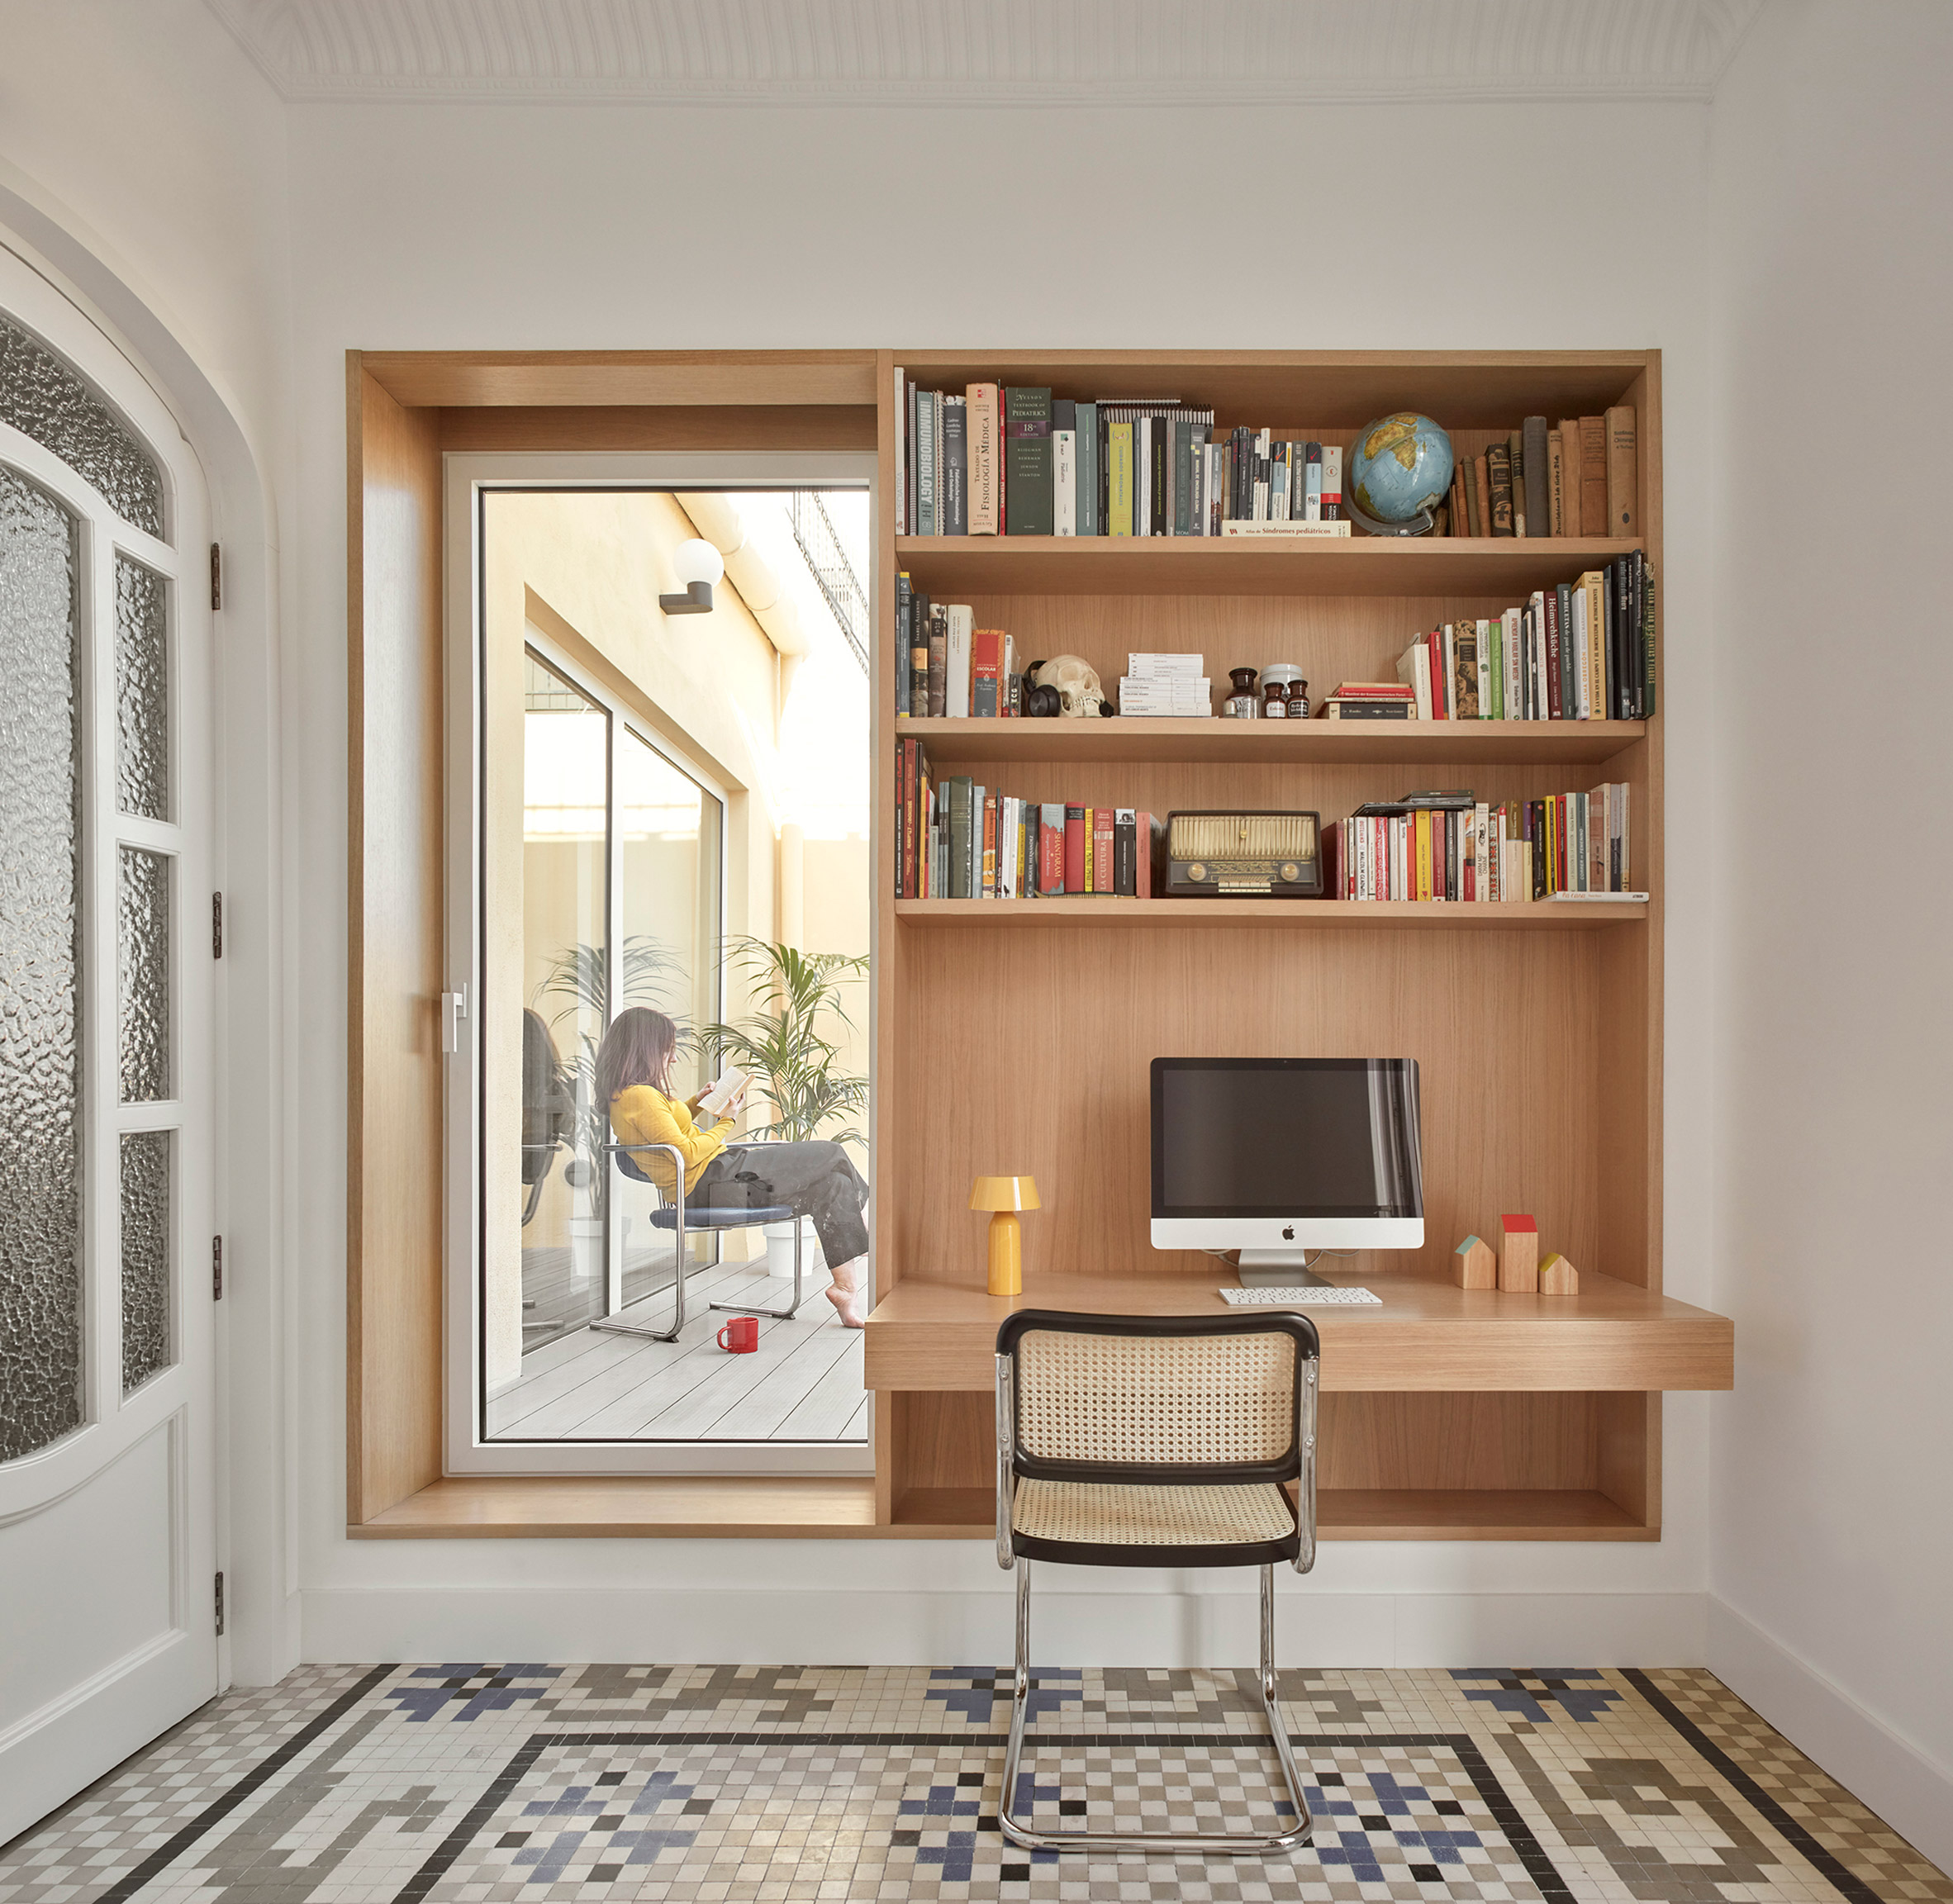 DG Arquitecto adds minimalist interventions to historic Valencia apartment